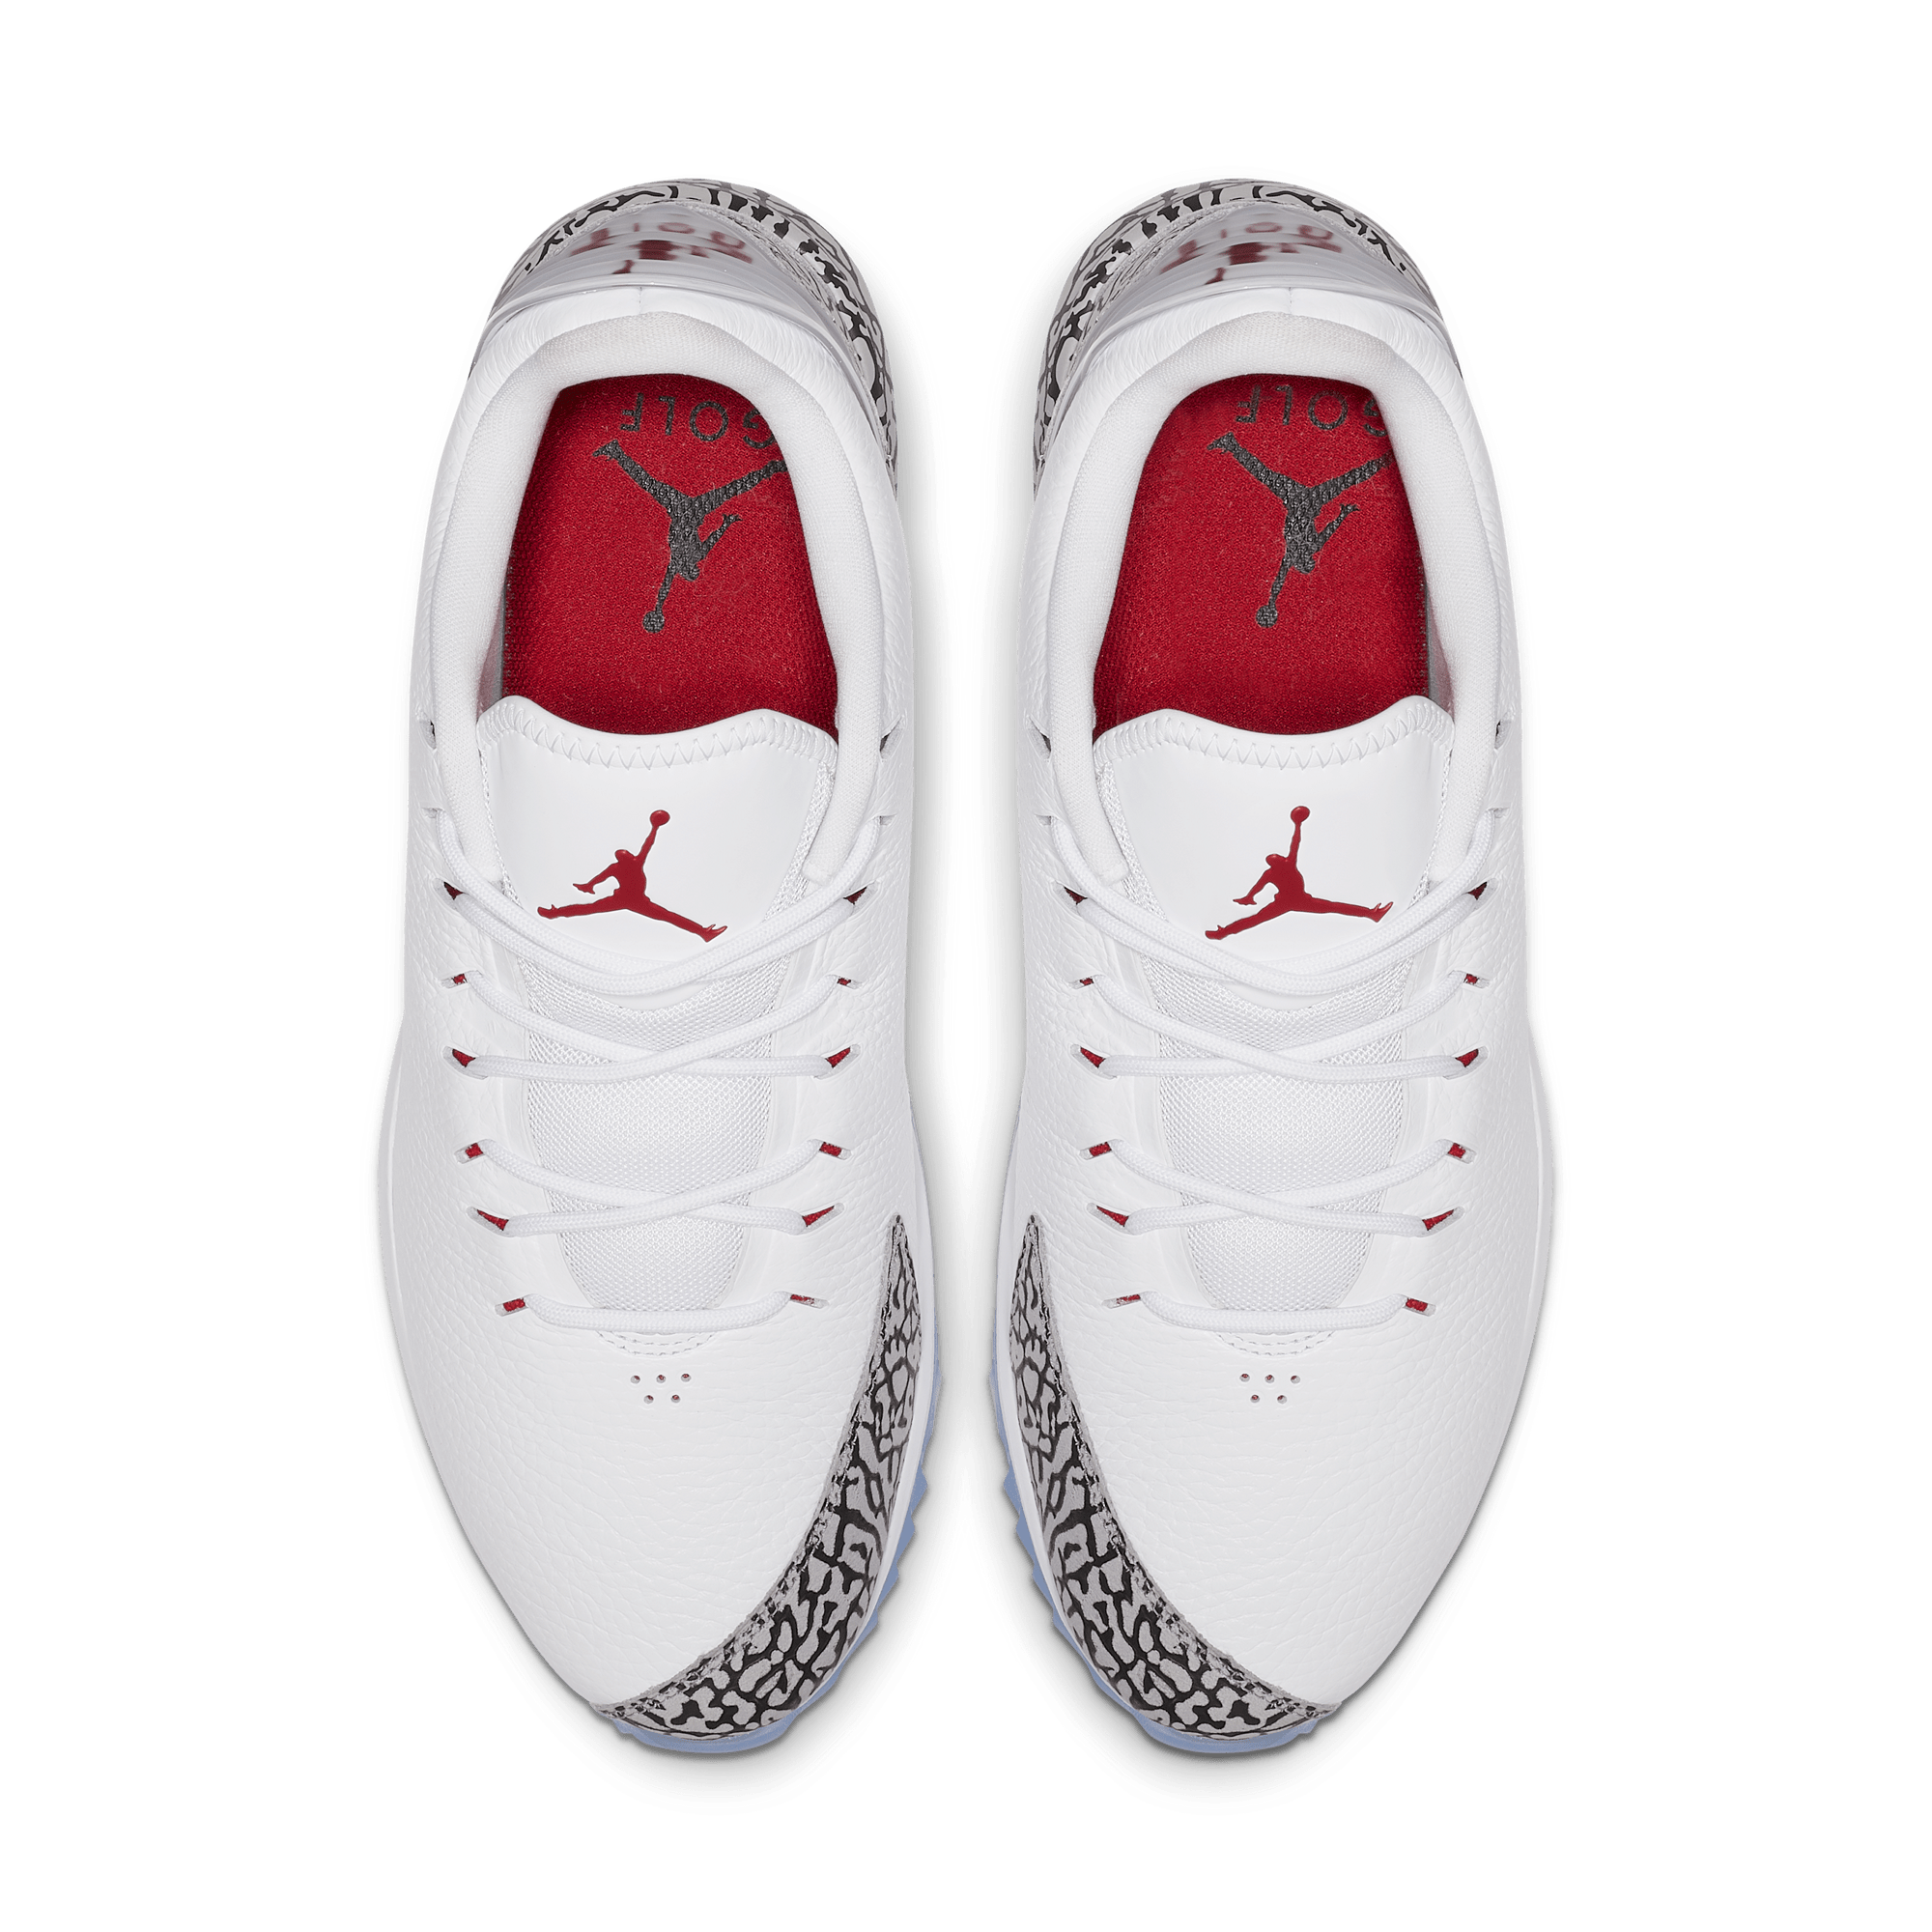 jordan adg white golf shoes